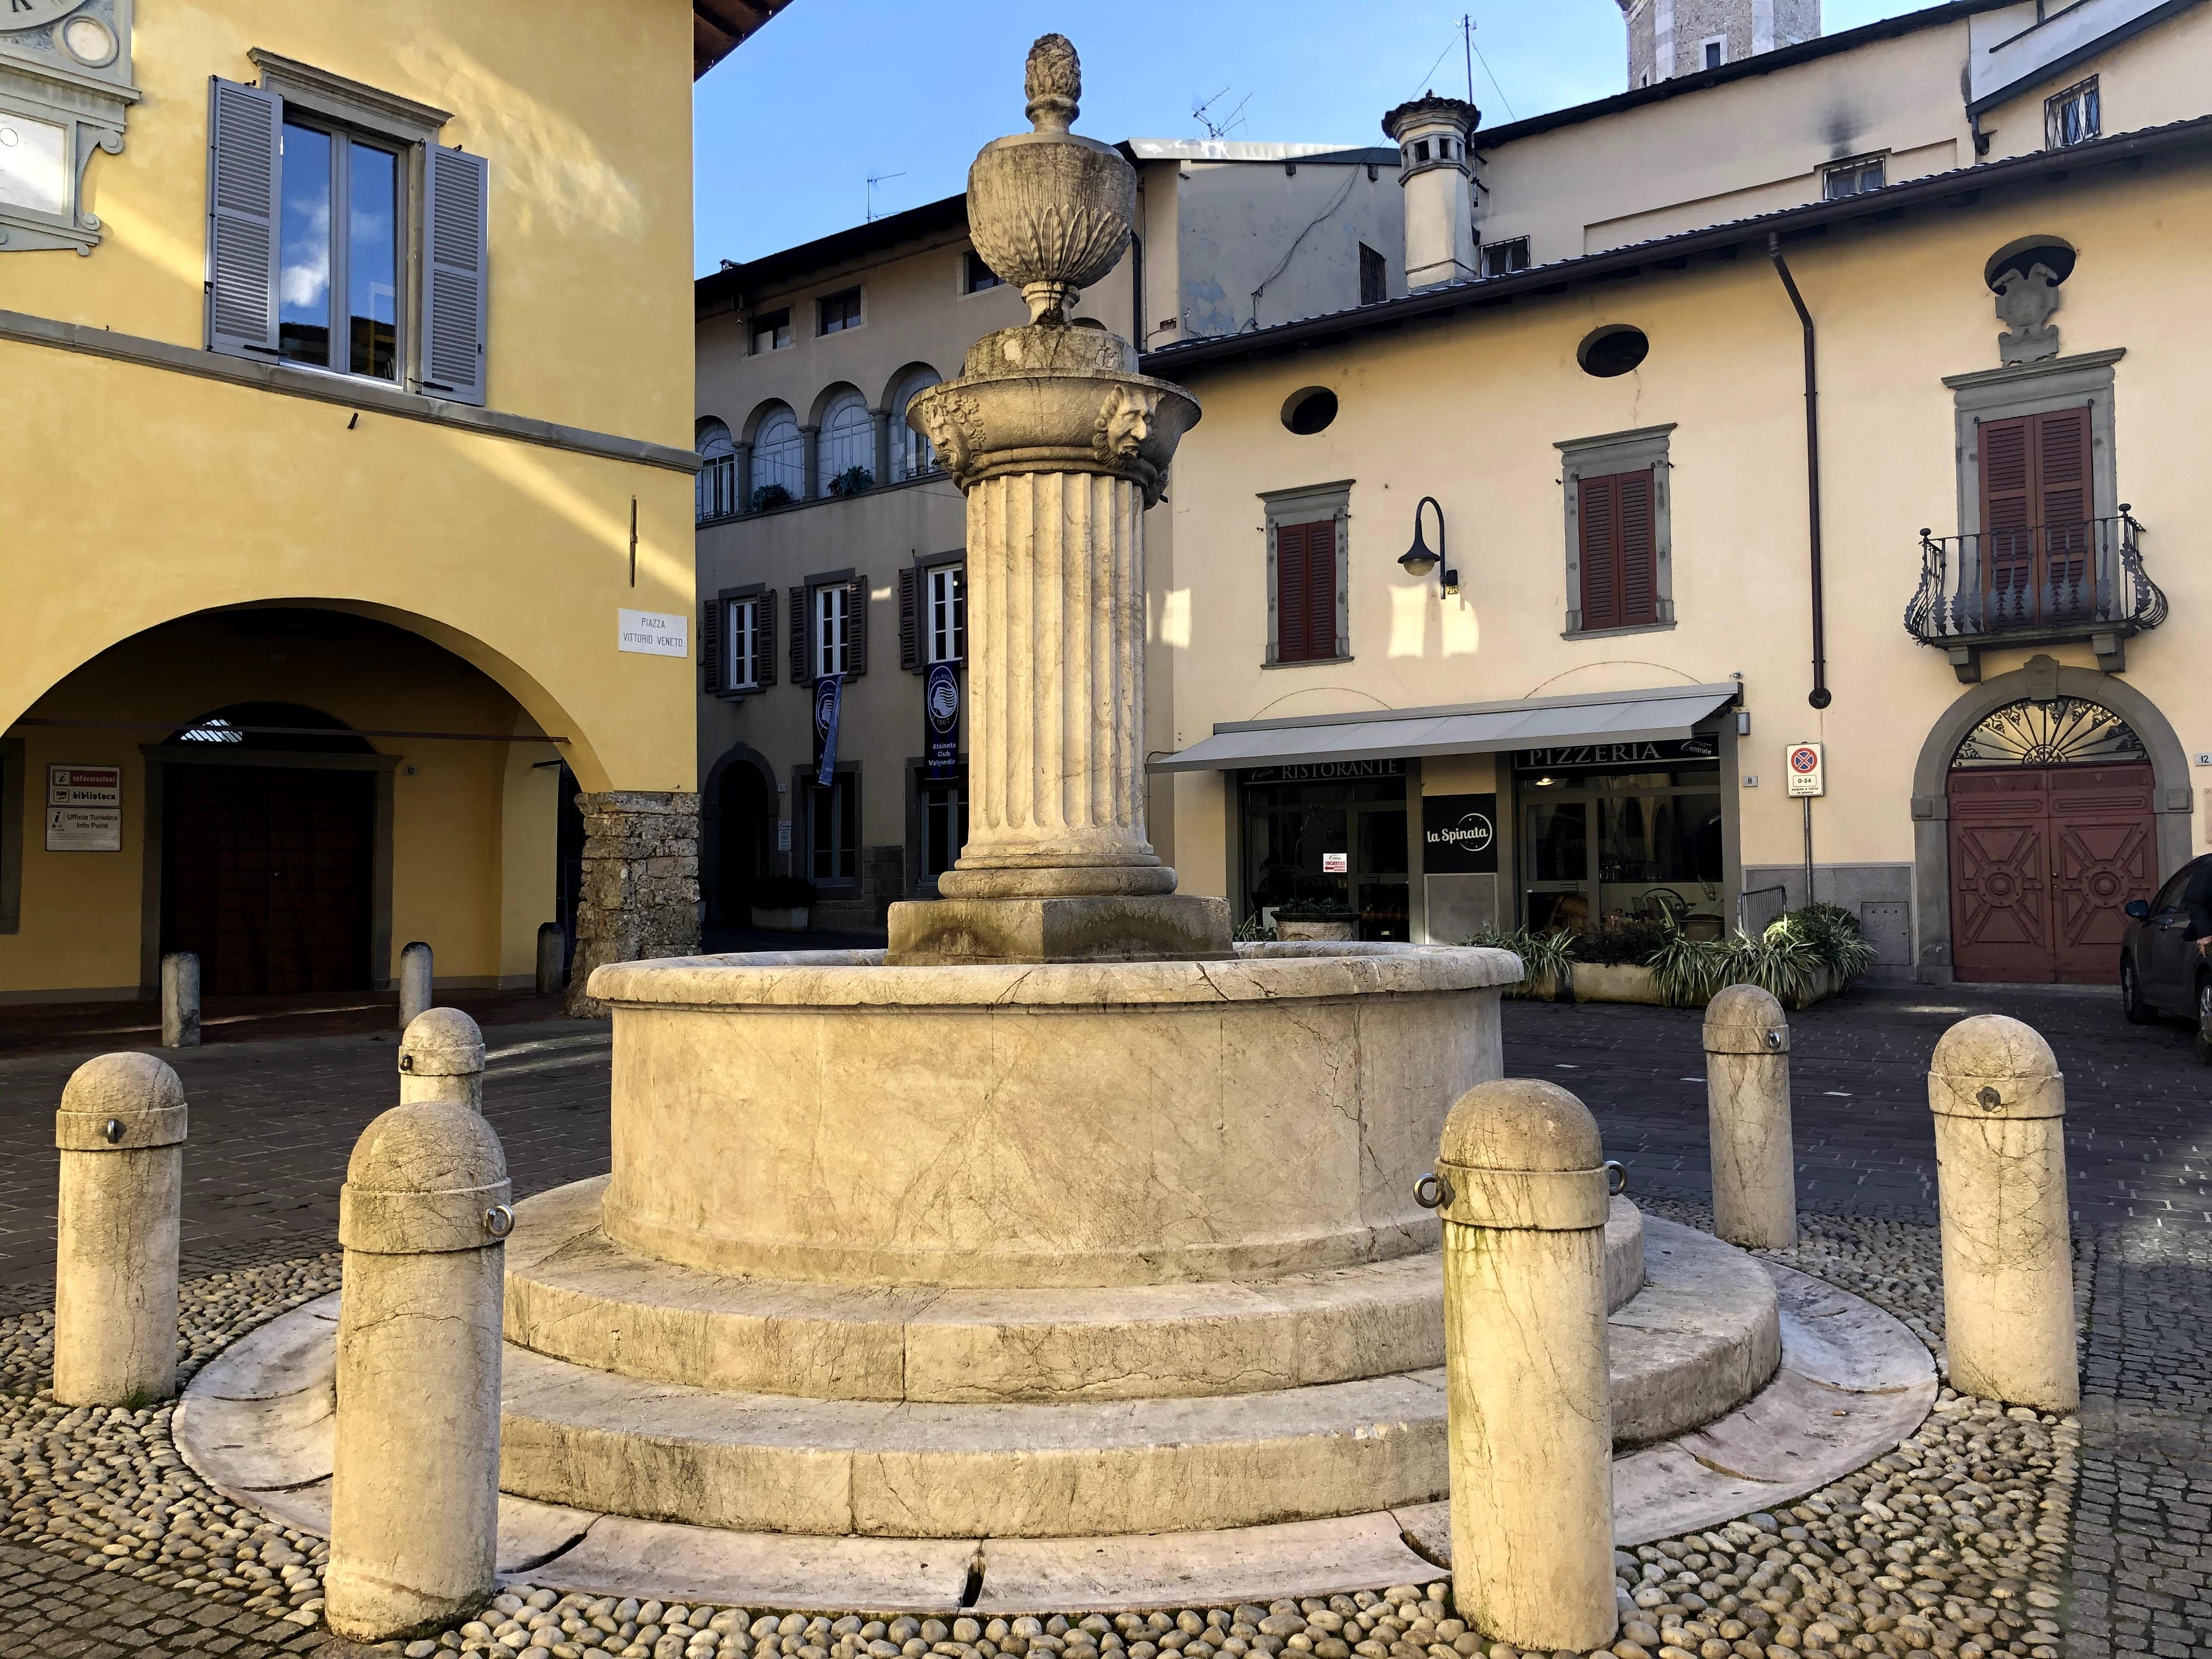 Fontana di piazza (Fontana del secolo XVIII) (fontana) - Gandino (BG)  (XVIII)